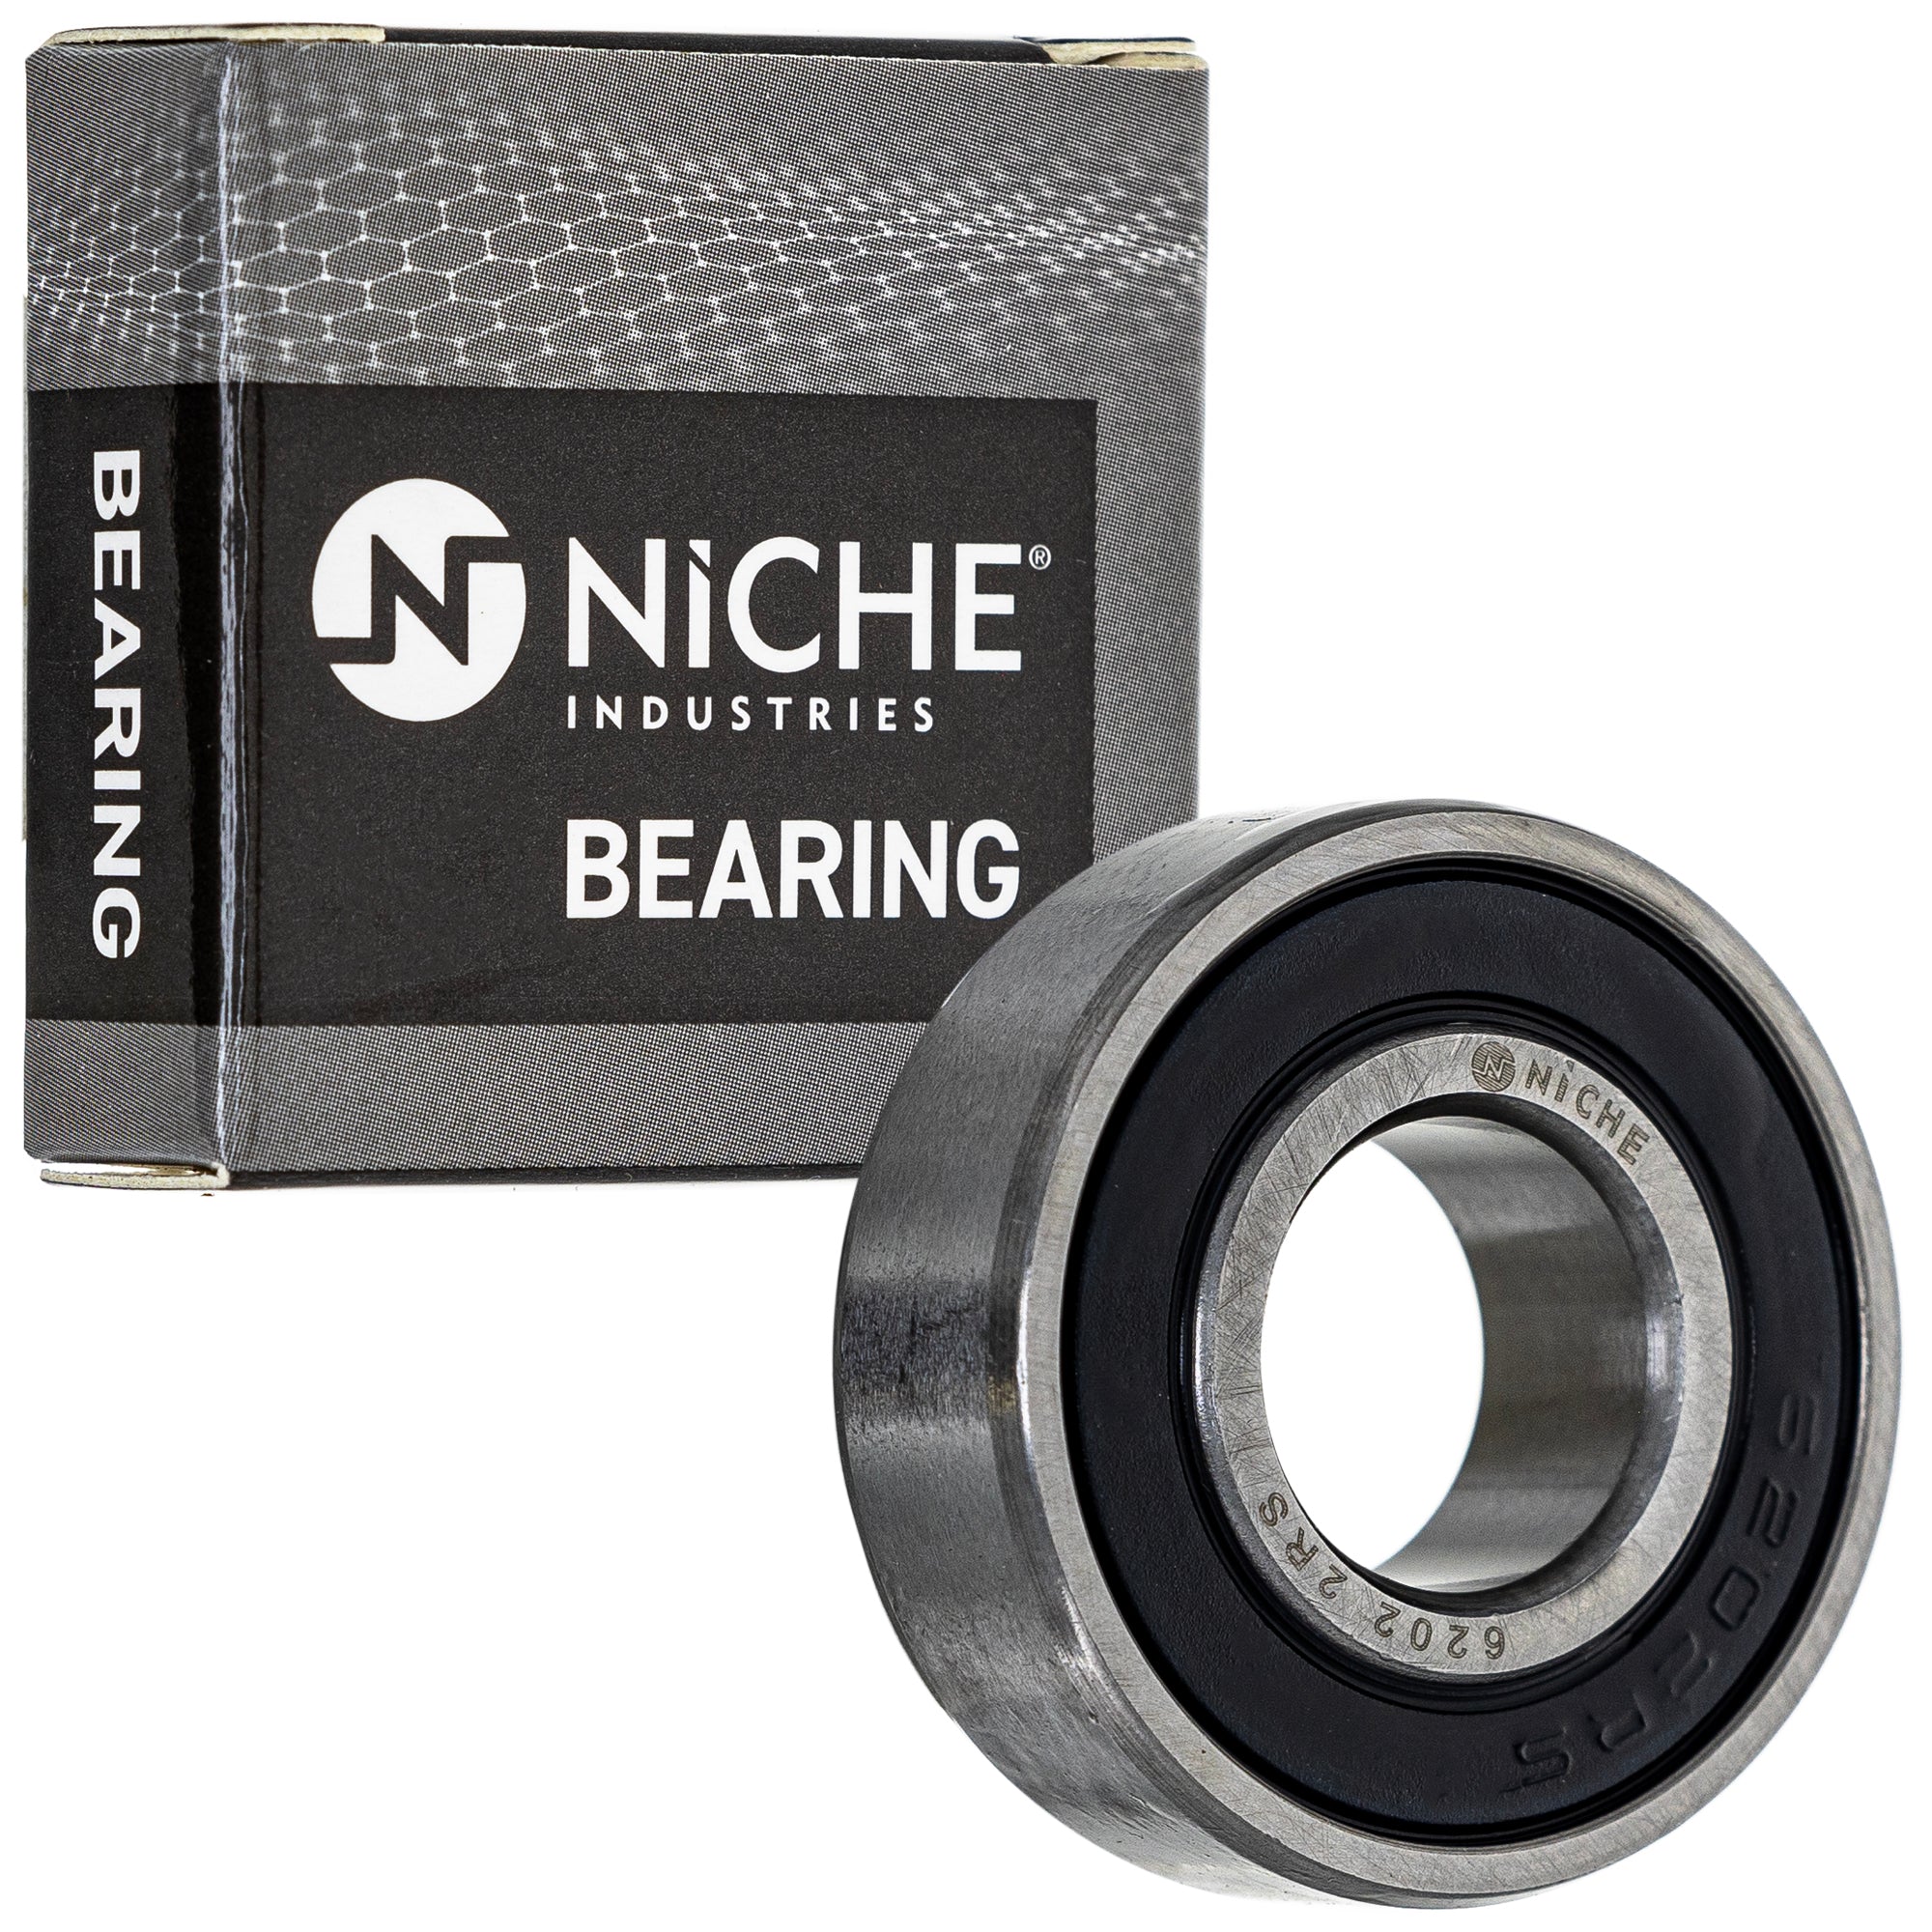 NICHE 519-CBB2227R Bearing & Seal Kit 10-Pack for zOTHER Polaris